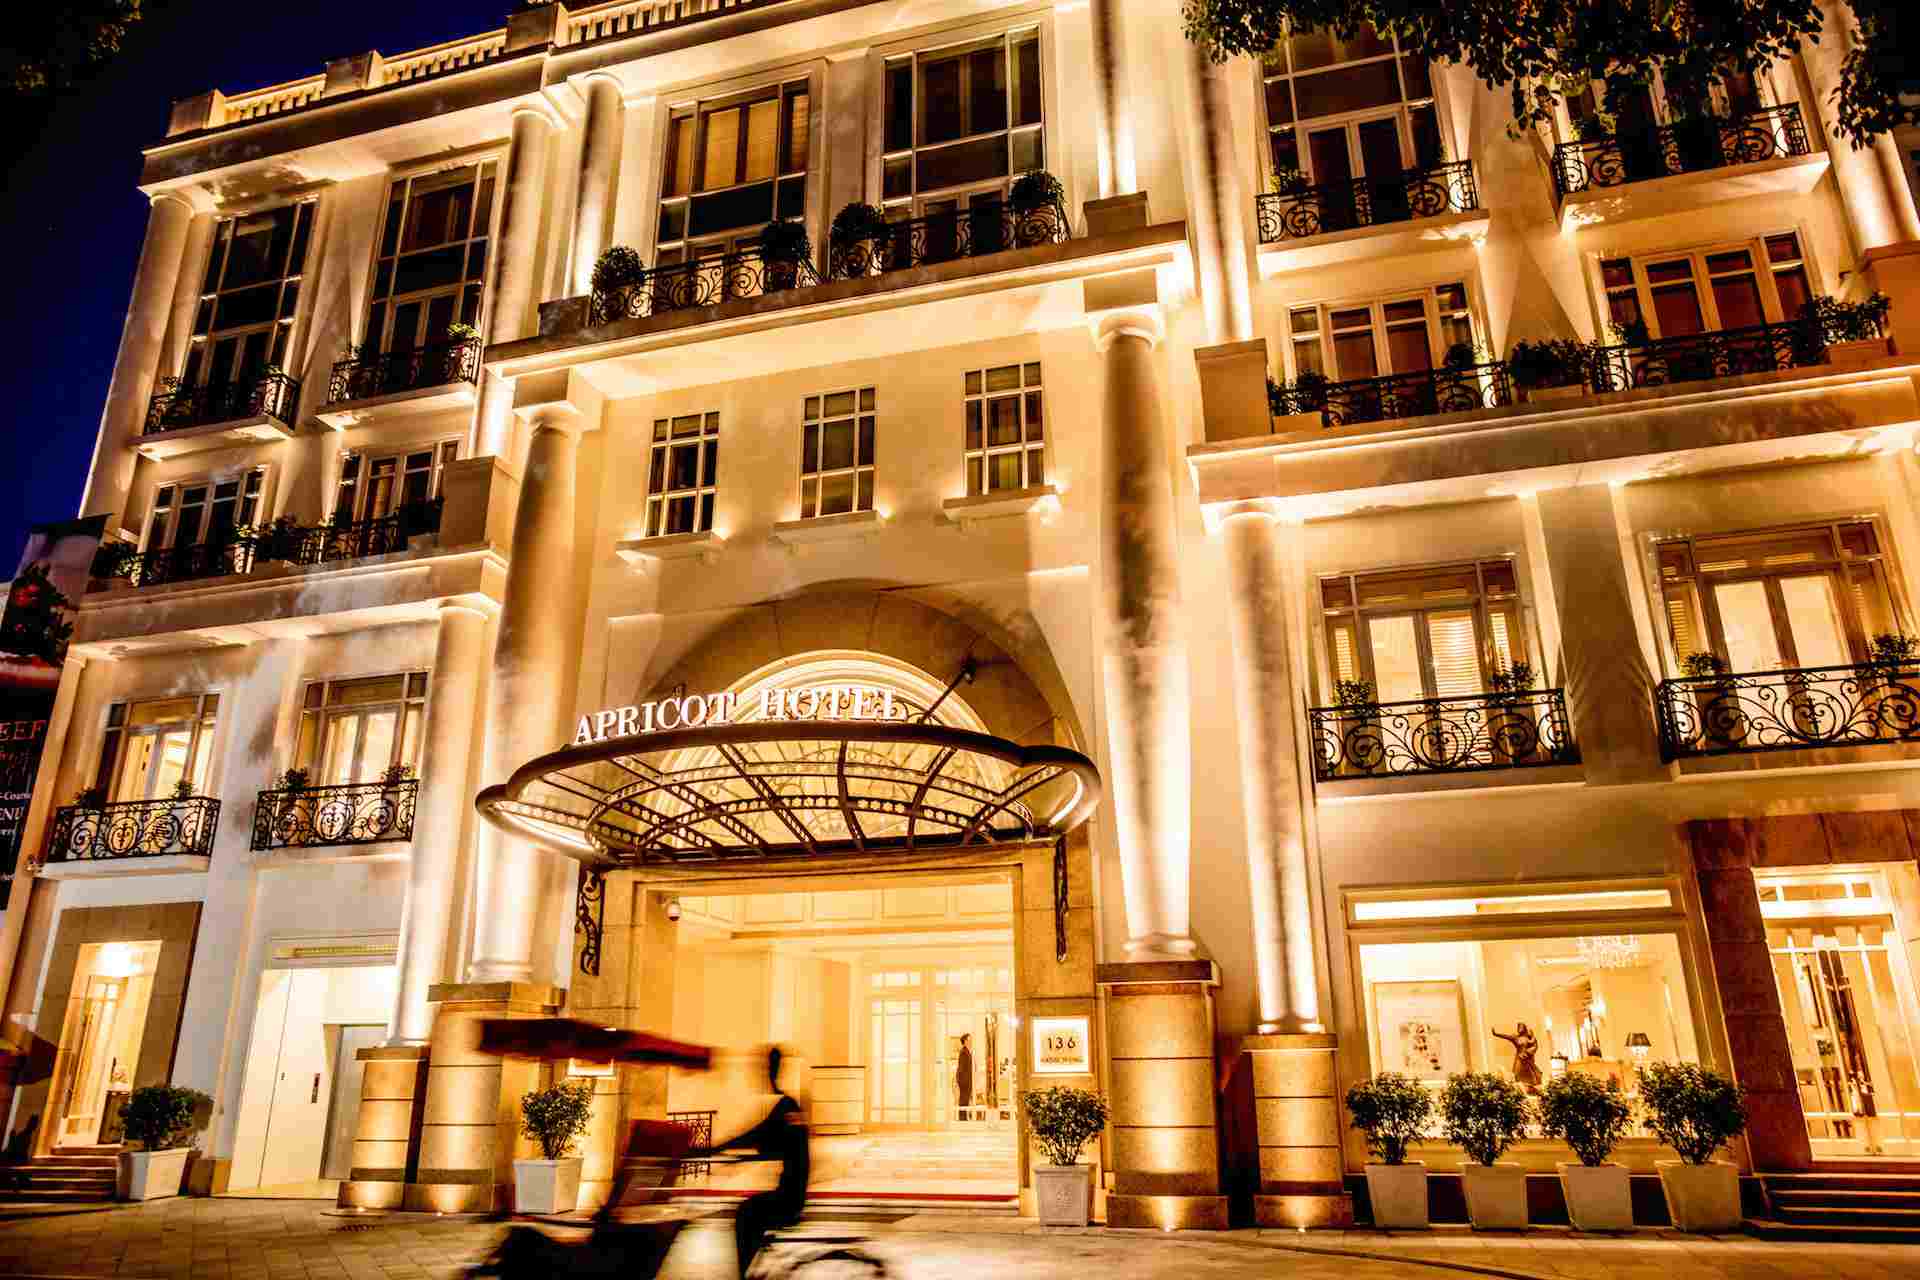 4 Star Hotels In Hanoi: Top 7 Best Service Hotels In Old Quarter, Hanoi